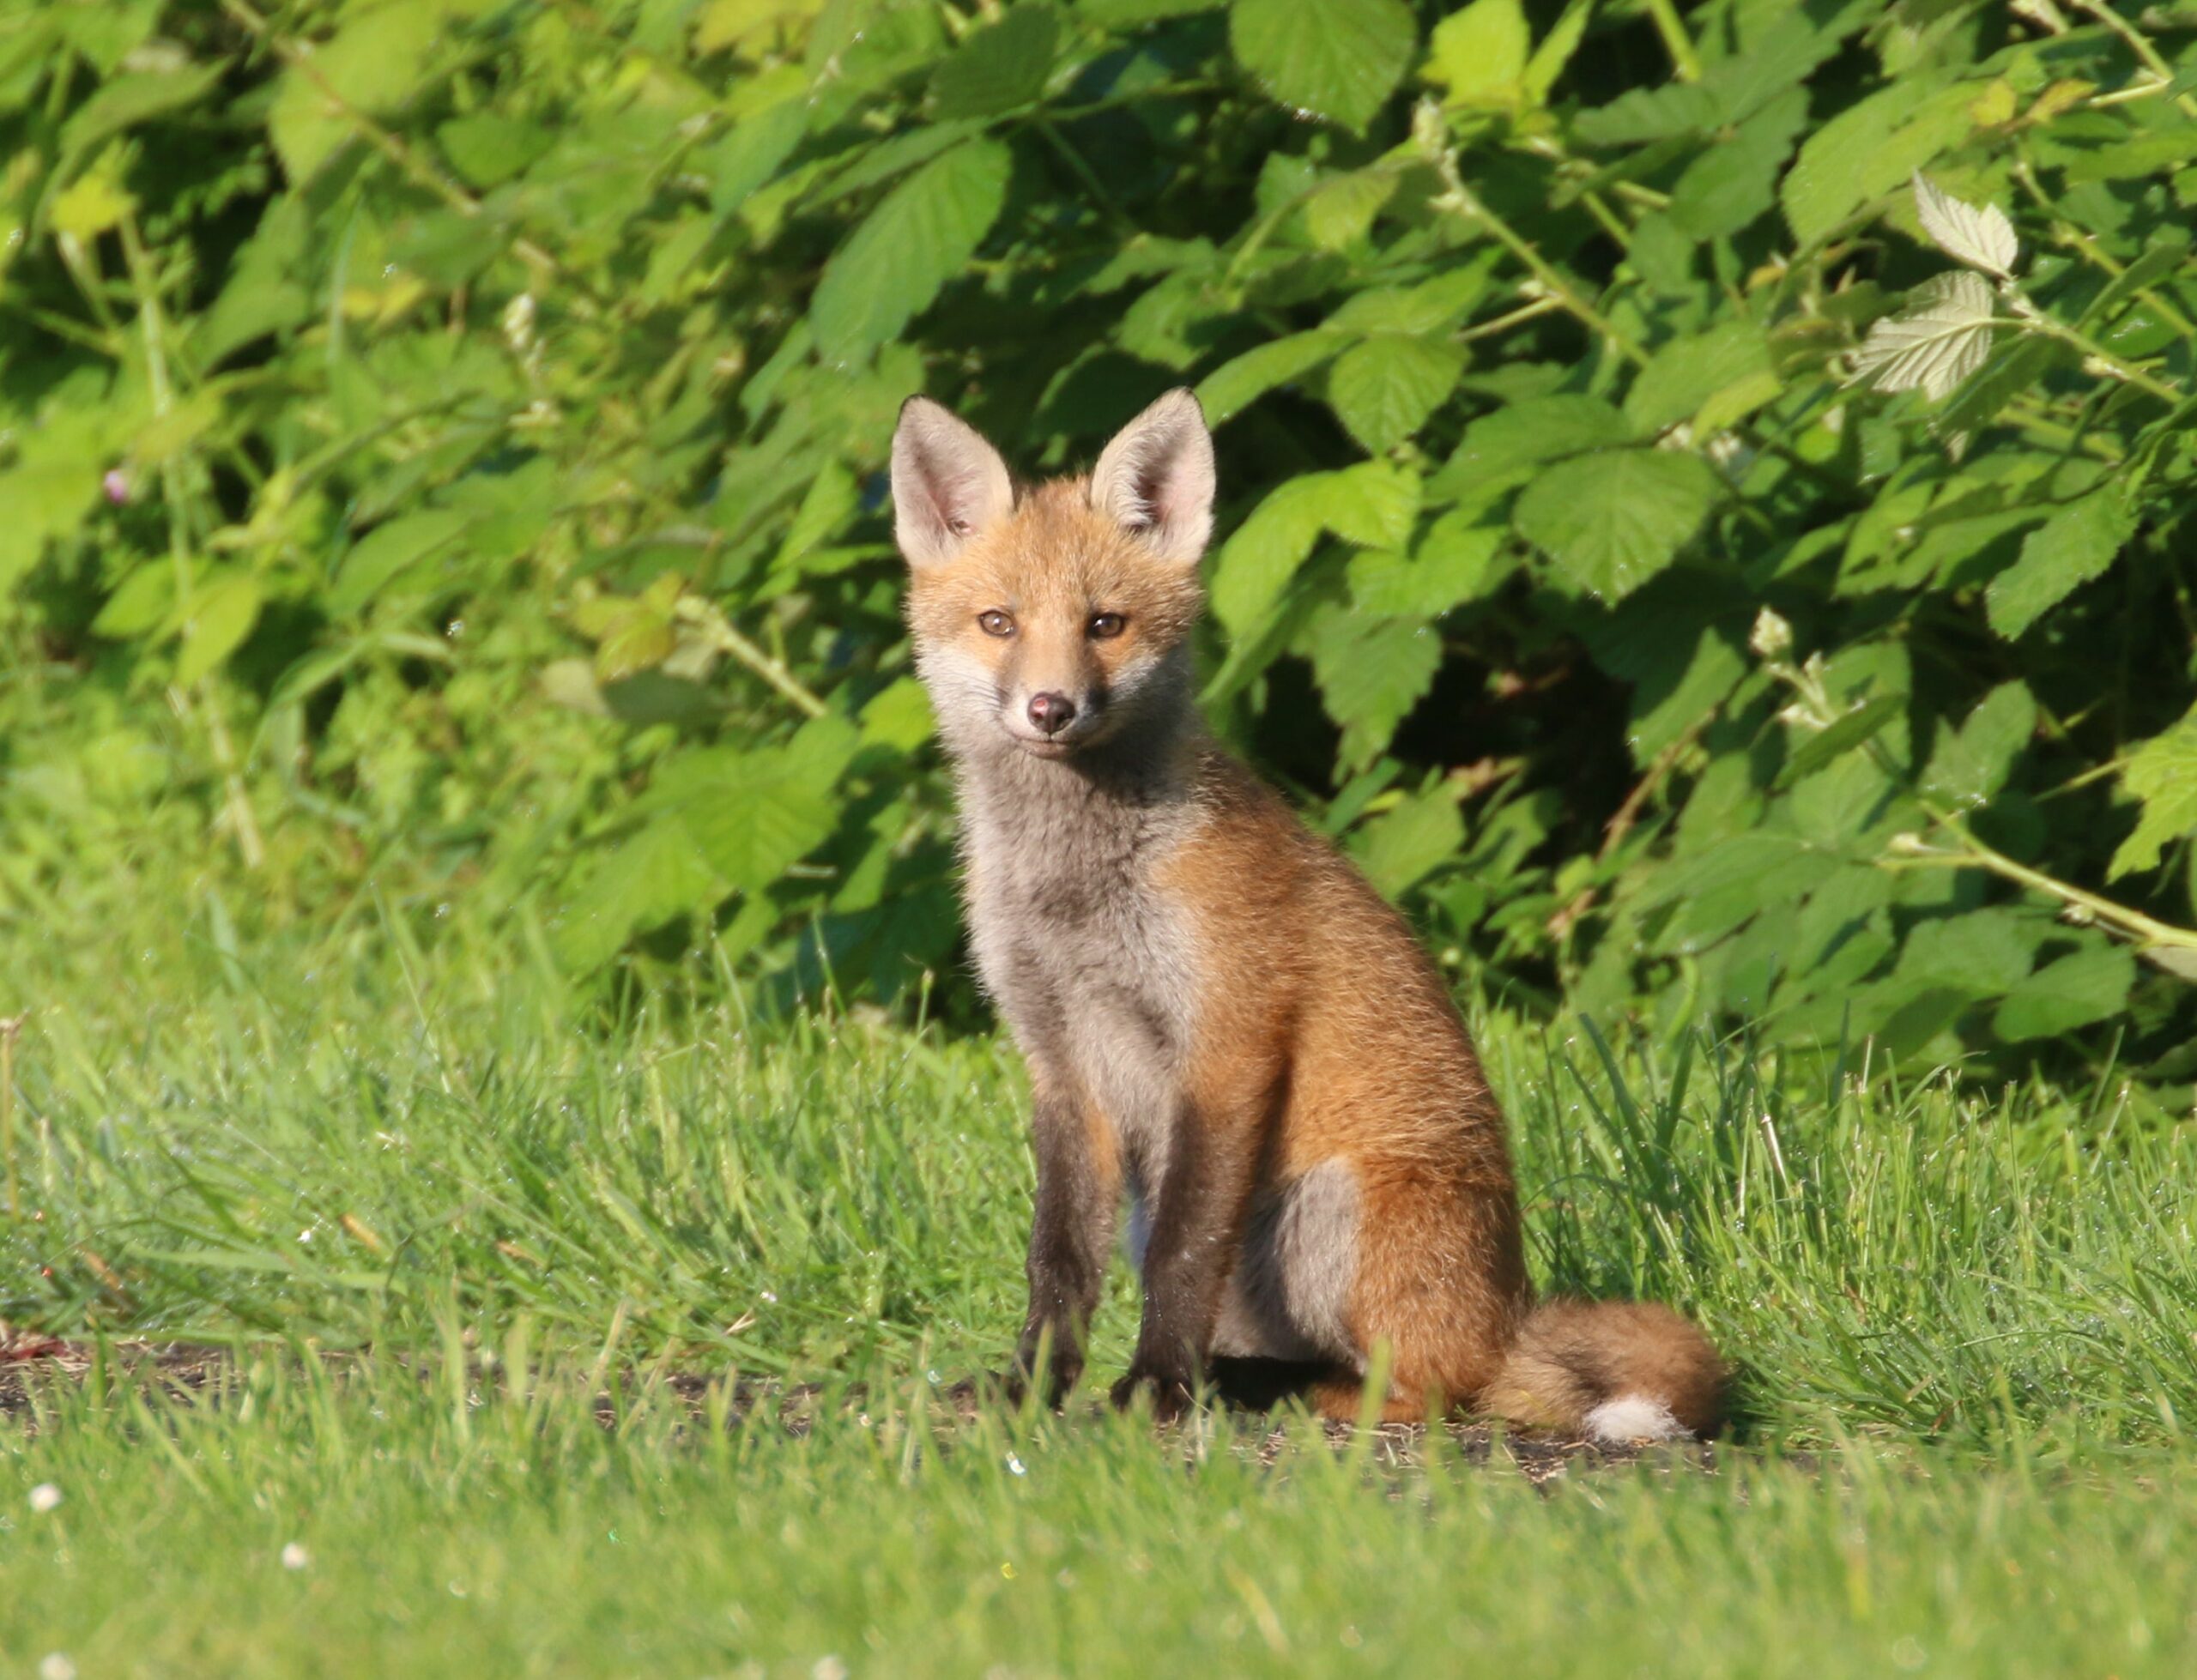 A fox cub on the grass